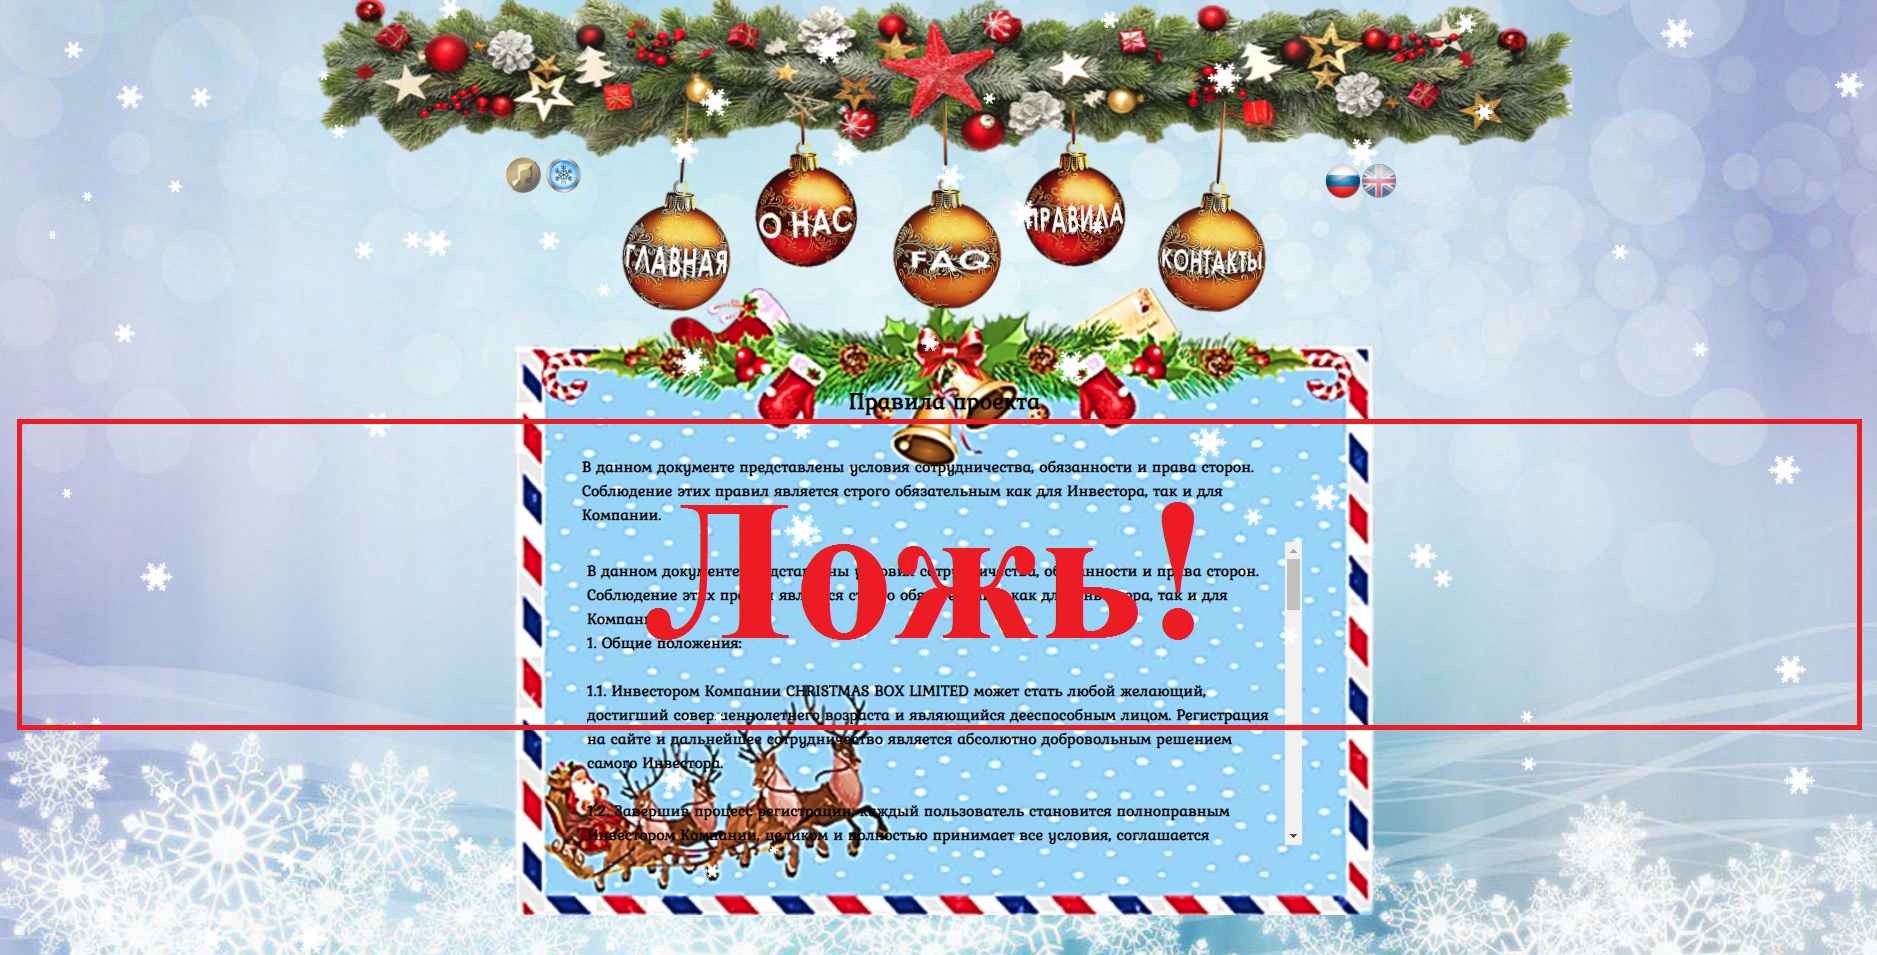 Christmas Box Limited – обман? Подарки на праздники от christmas-box.ltd